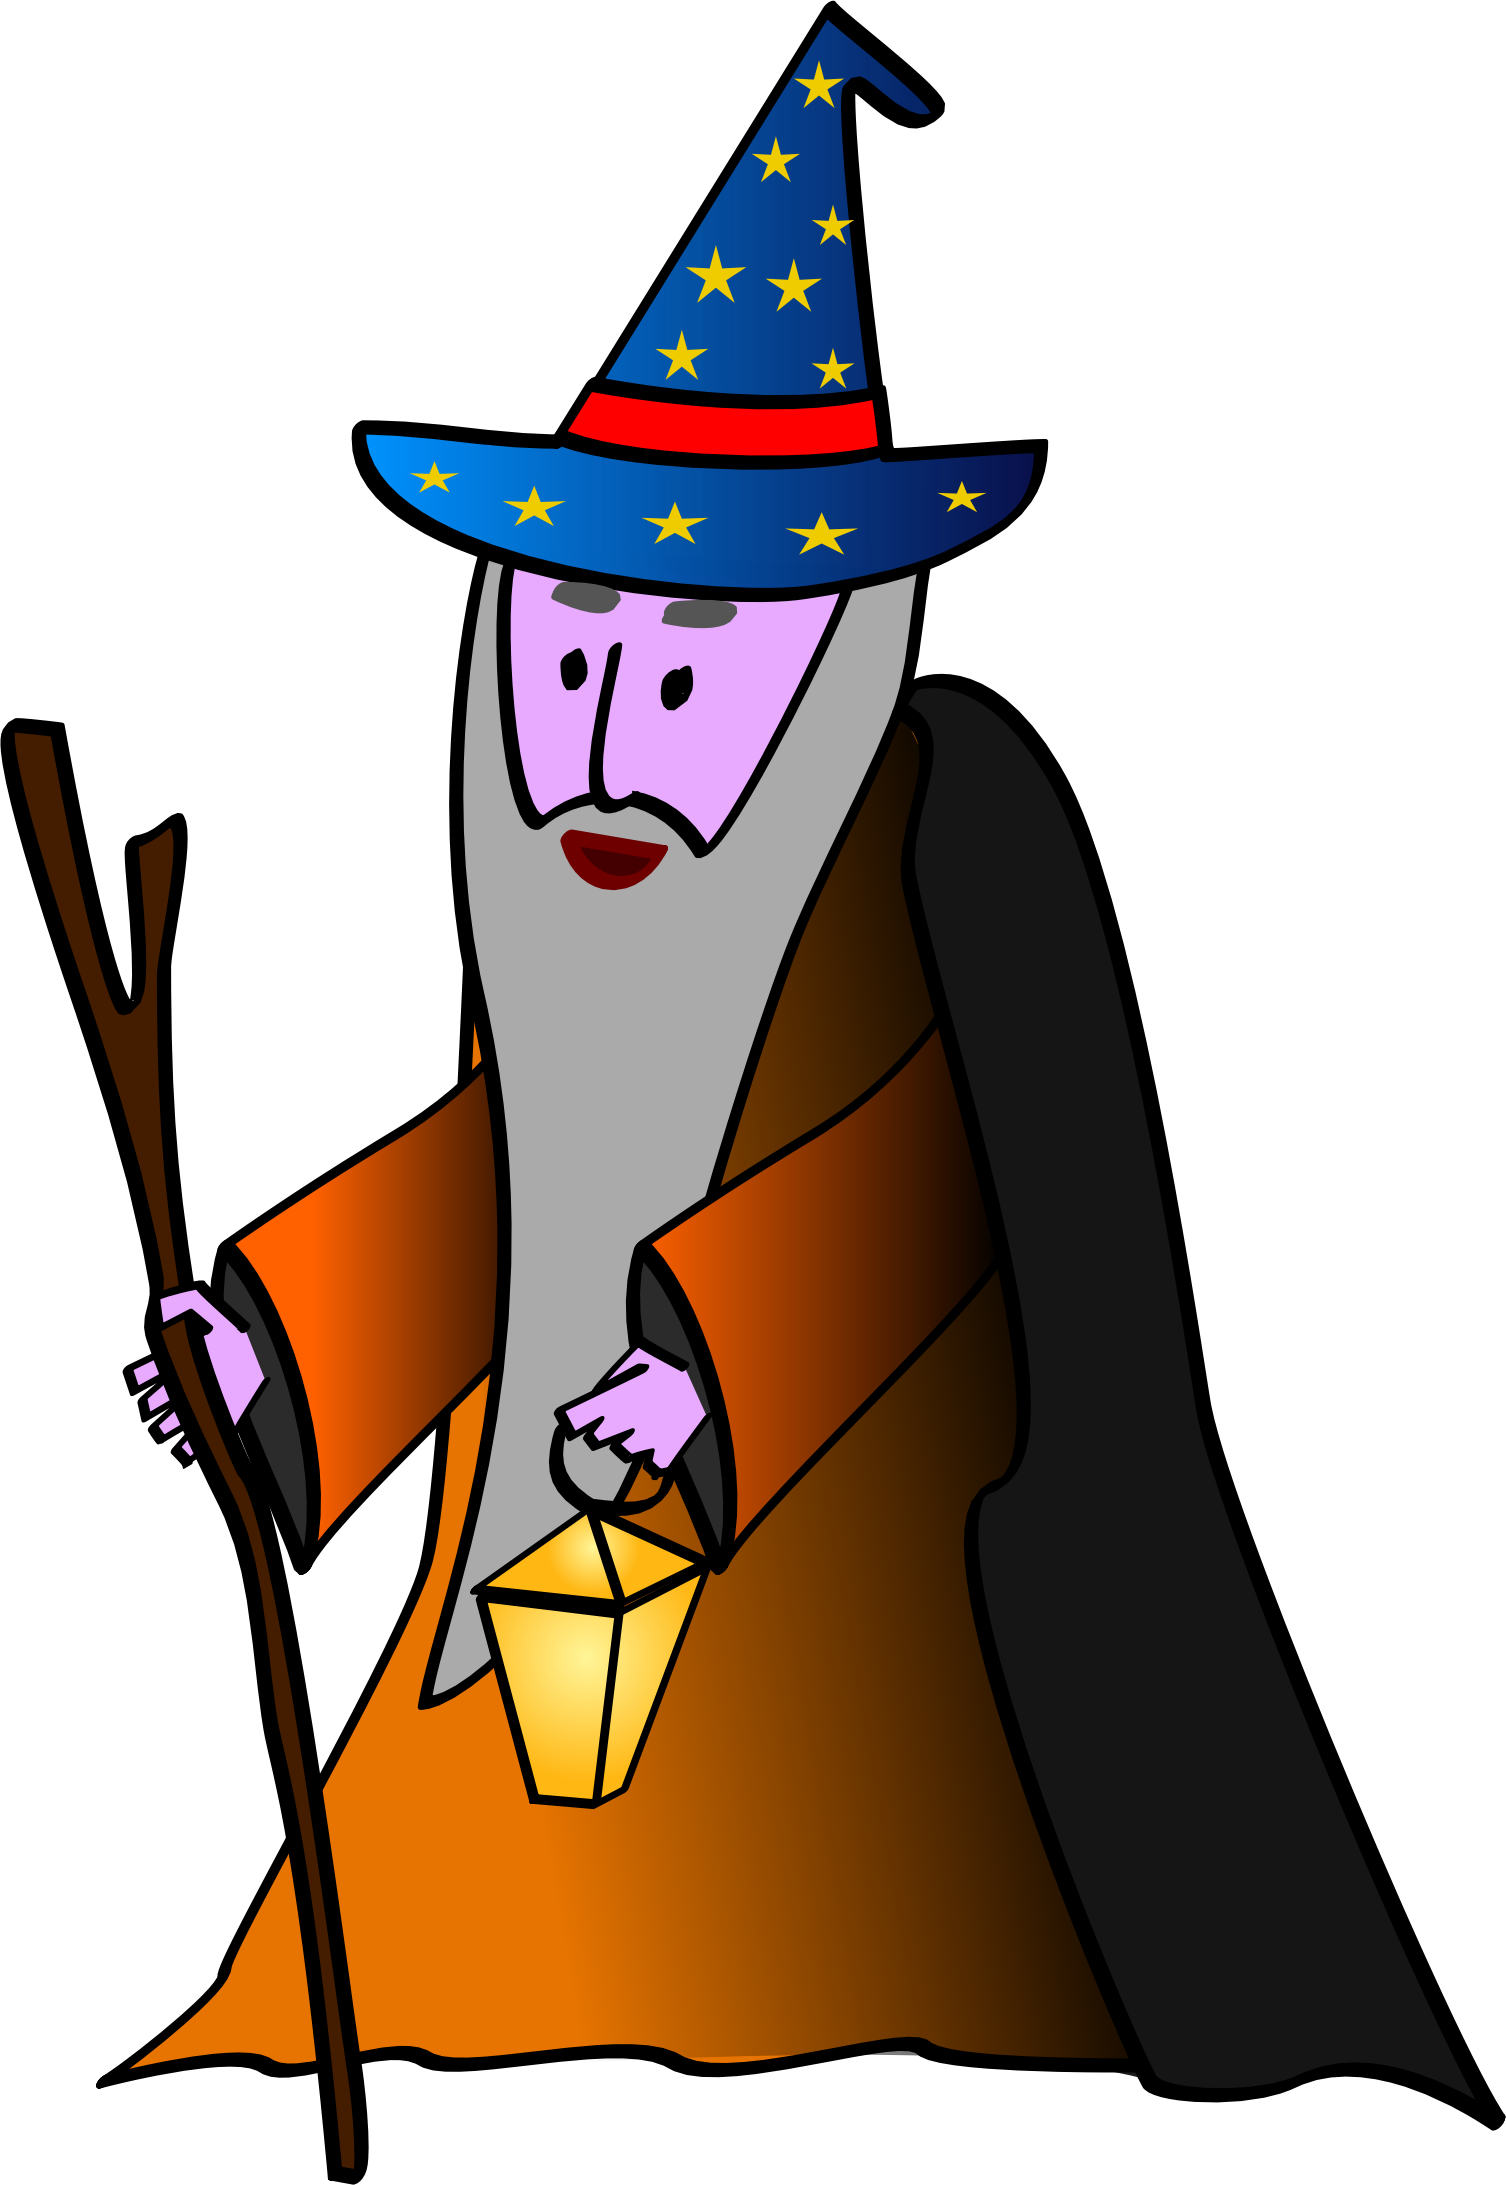 A Cartoon Of A Wizard Holding A Lantern